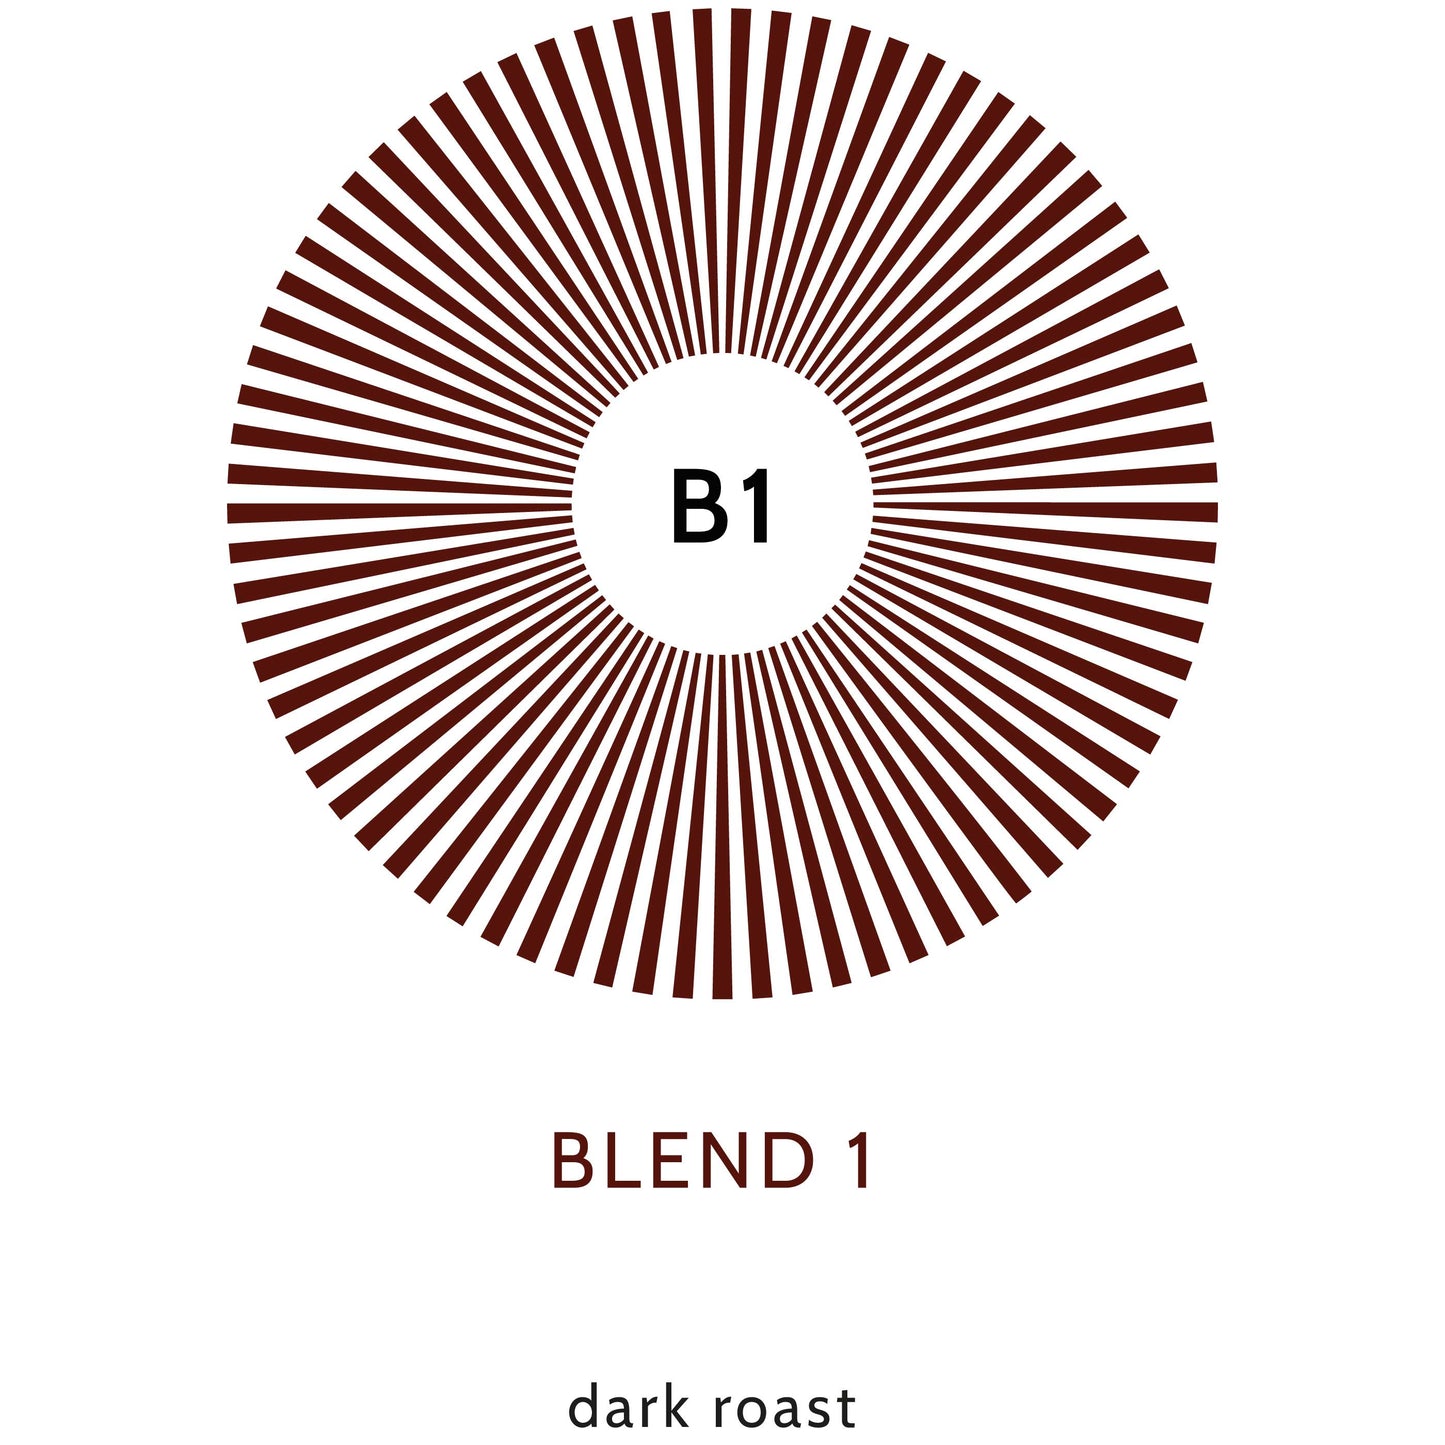 Hermetic B 1 espresso